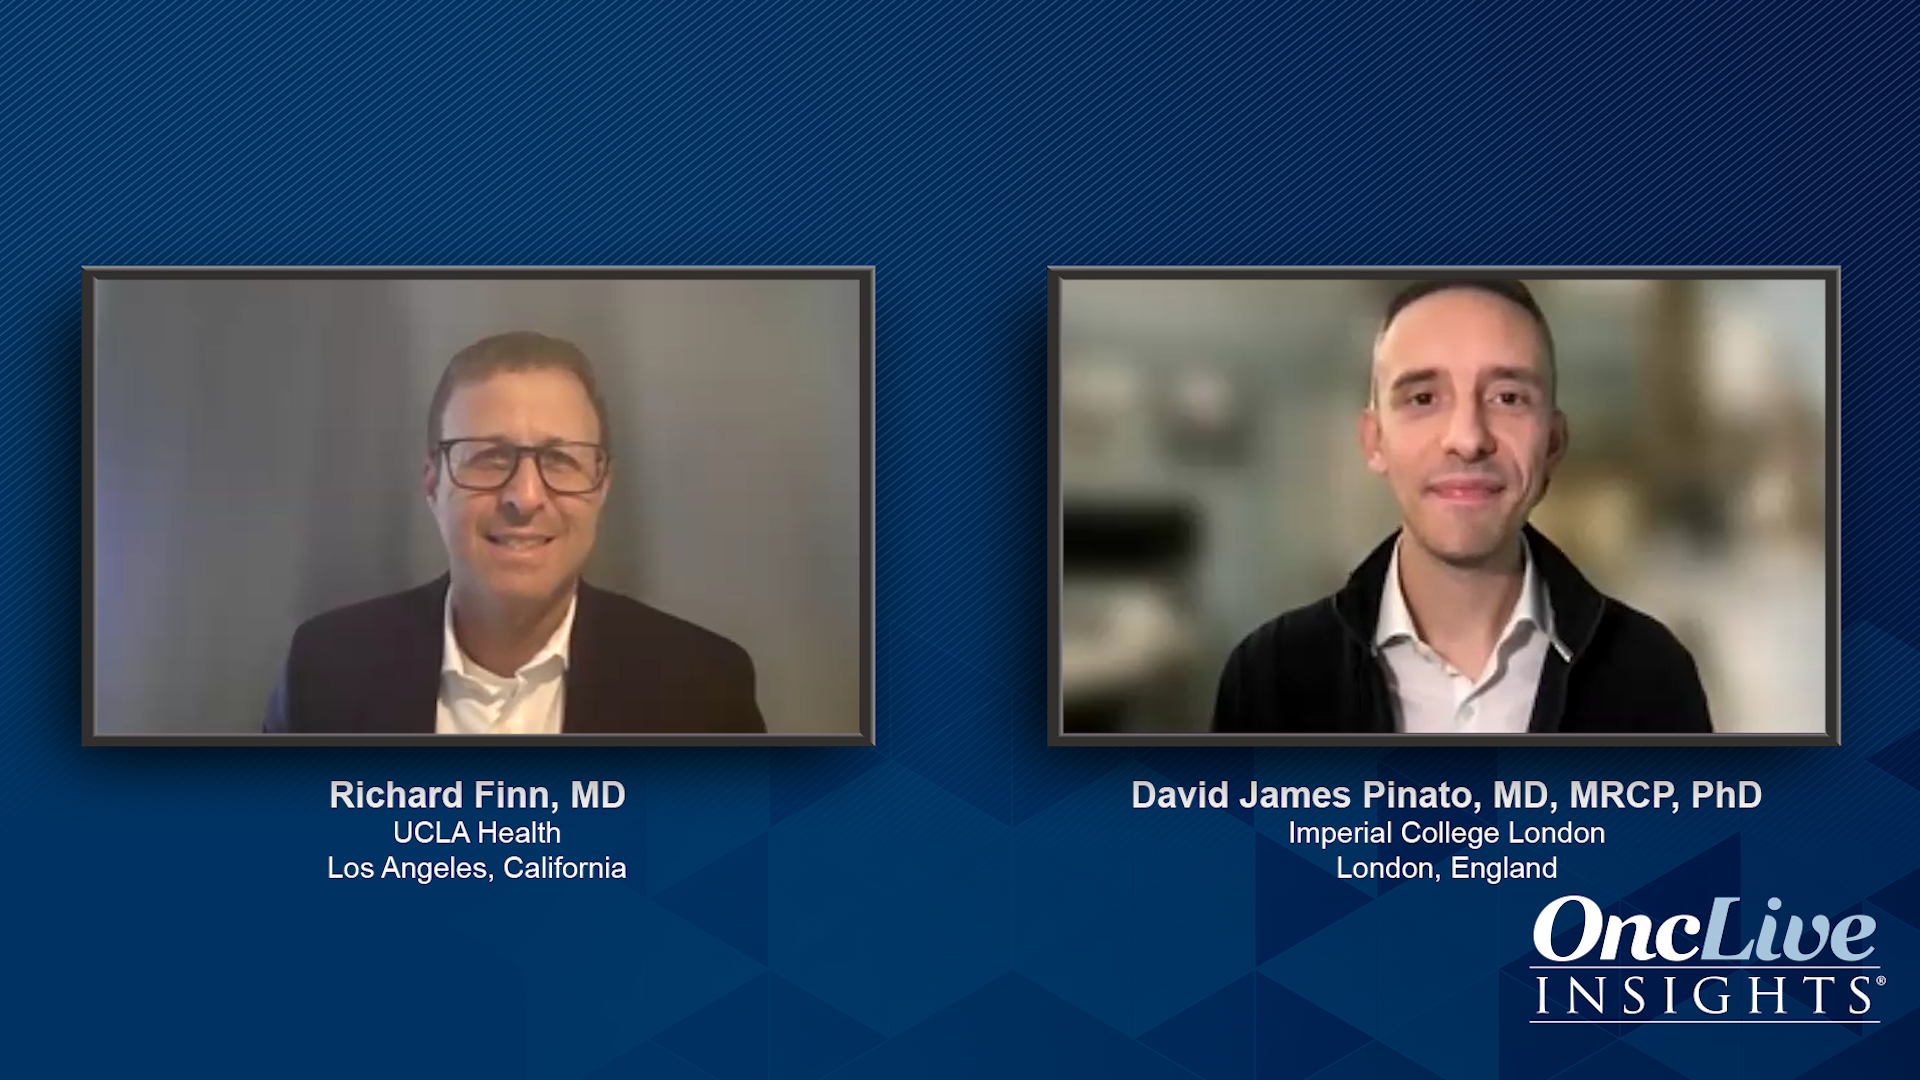 Richard Finn, MD, and David James Pinato, MD, MRCP, PhD, experts on hepatocellular carcinoma